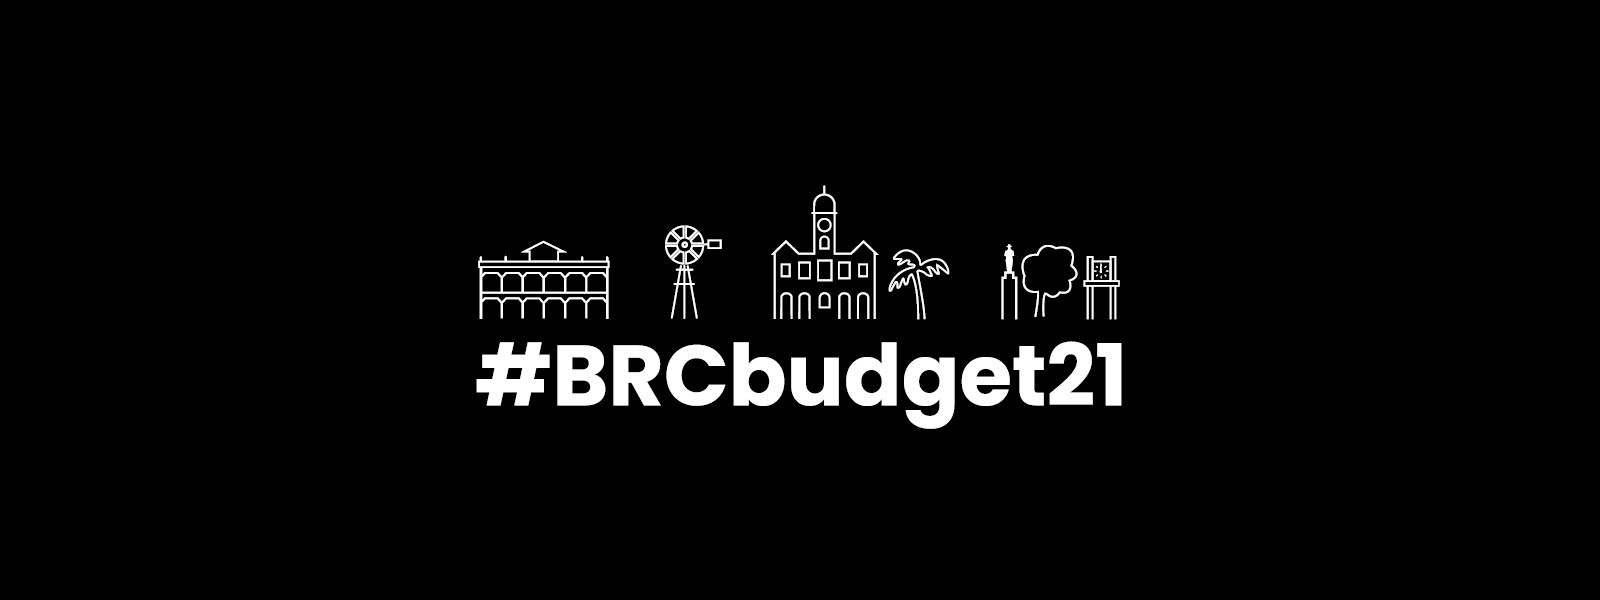 2021 Budget web banner